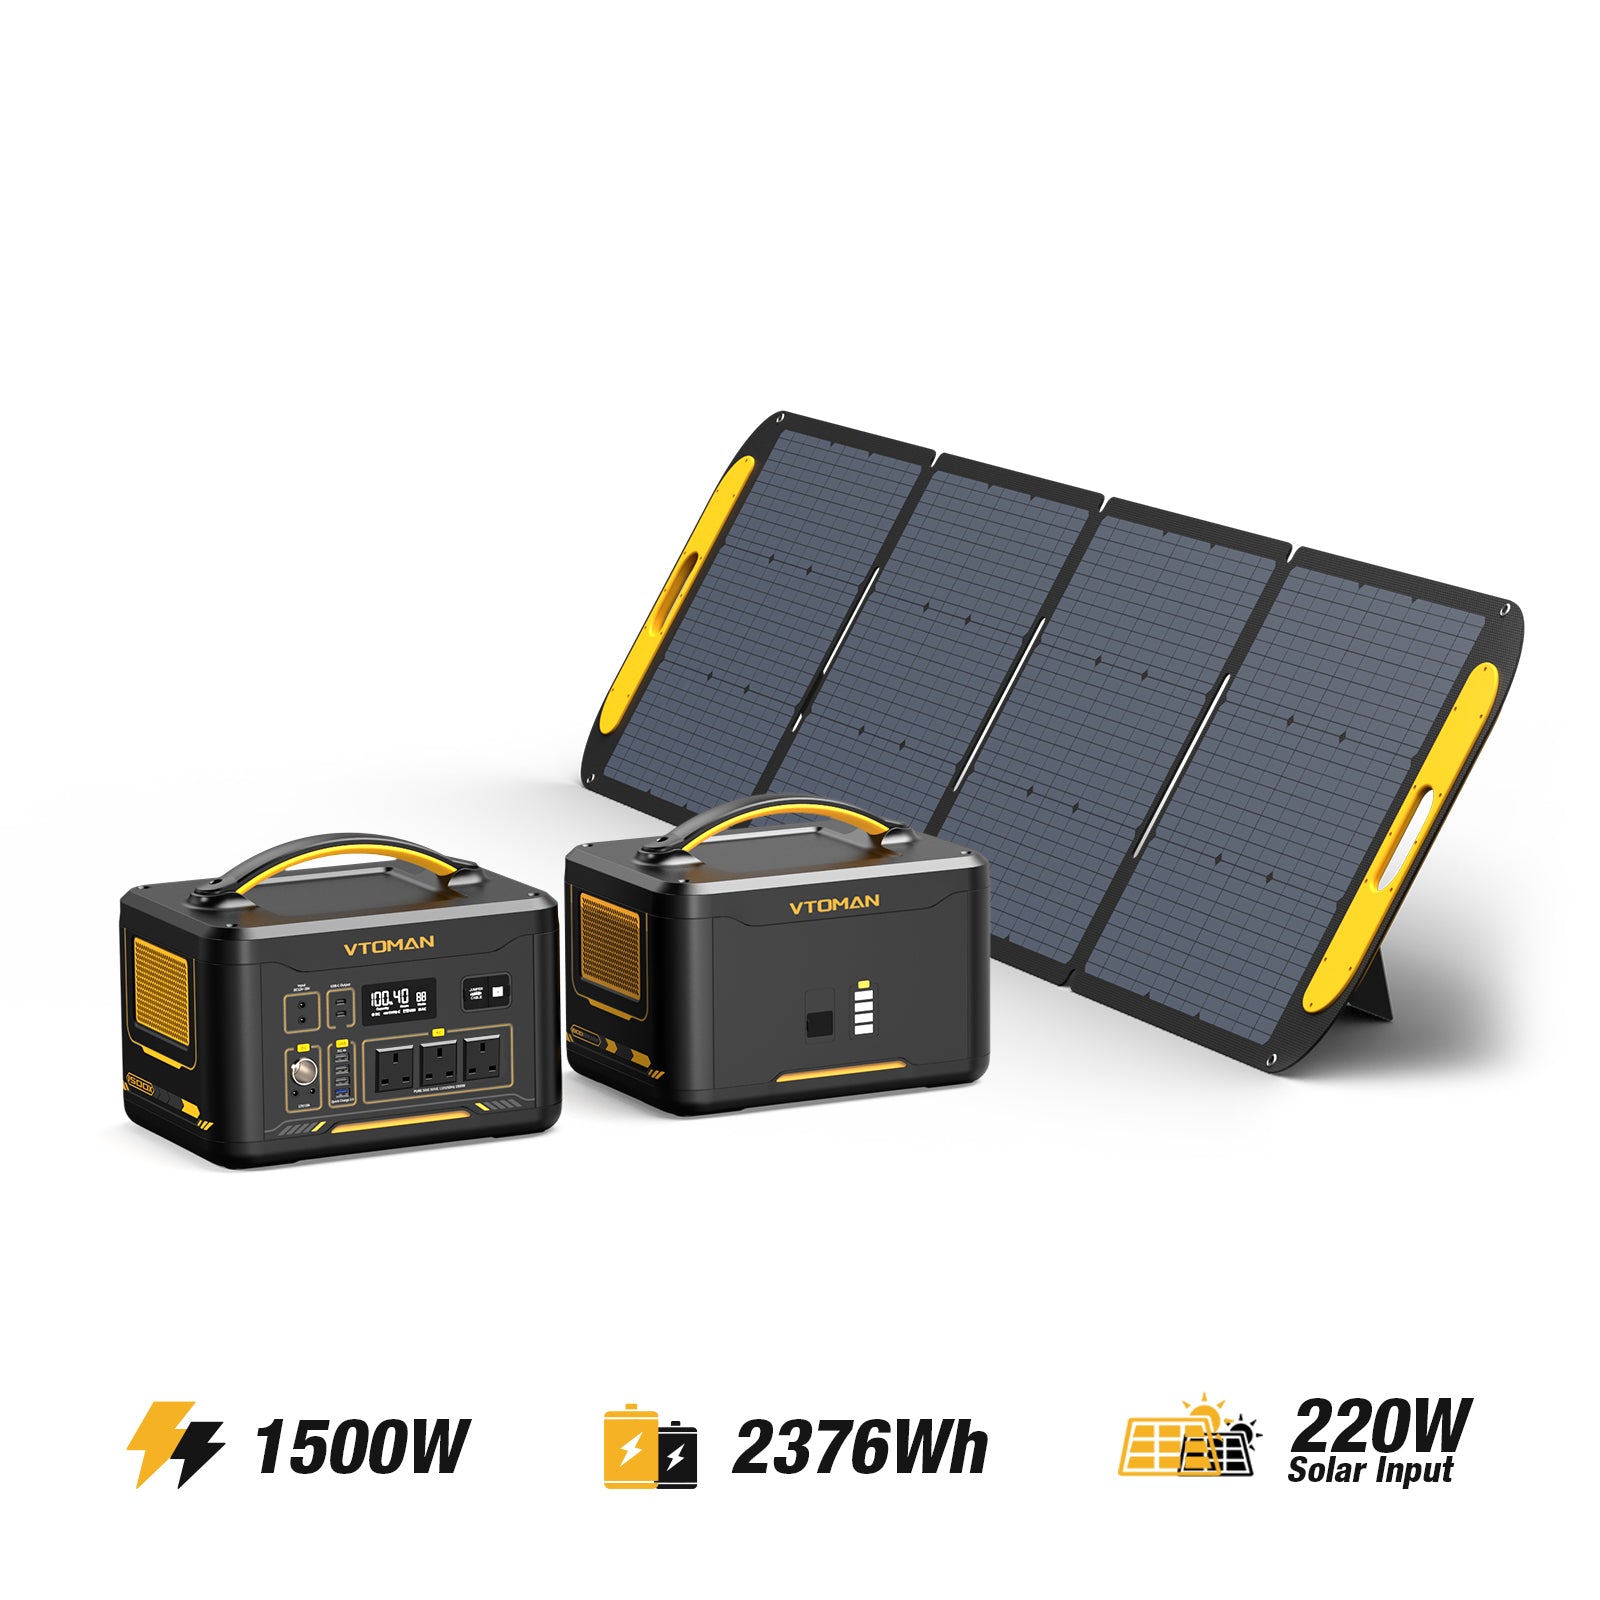 Jump 1500W/2376Wh 220W Solar Generator